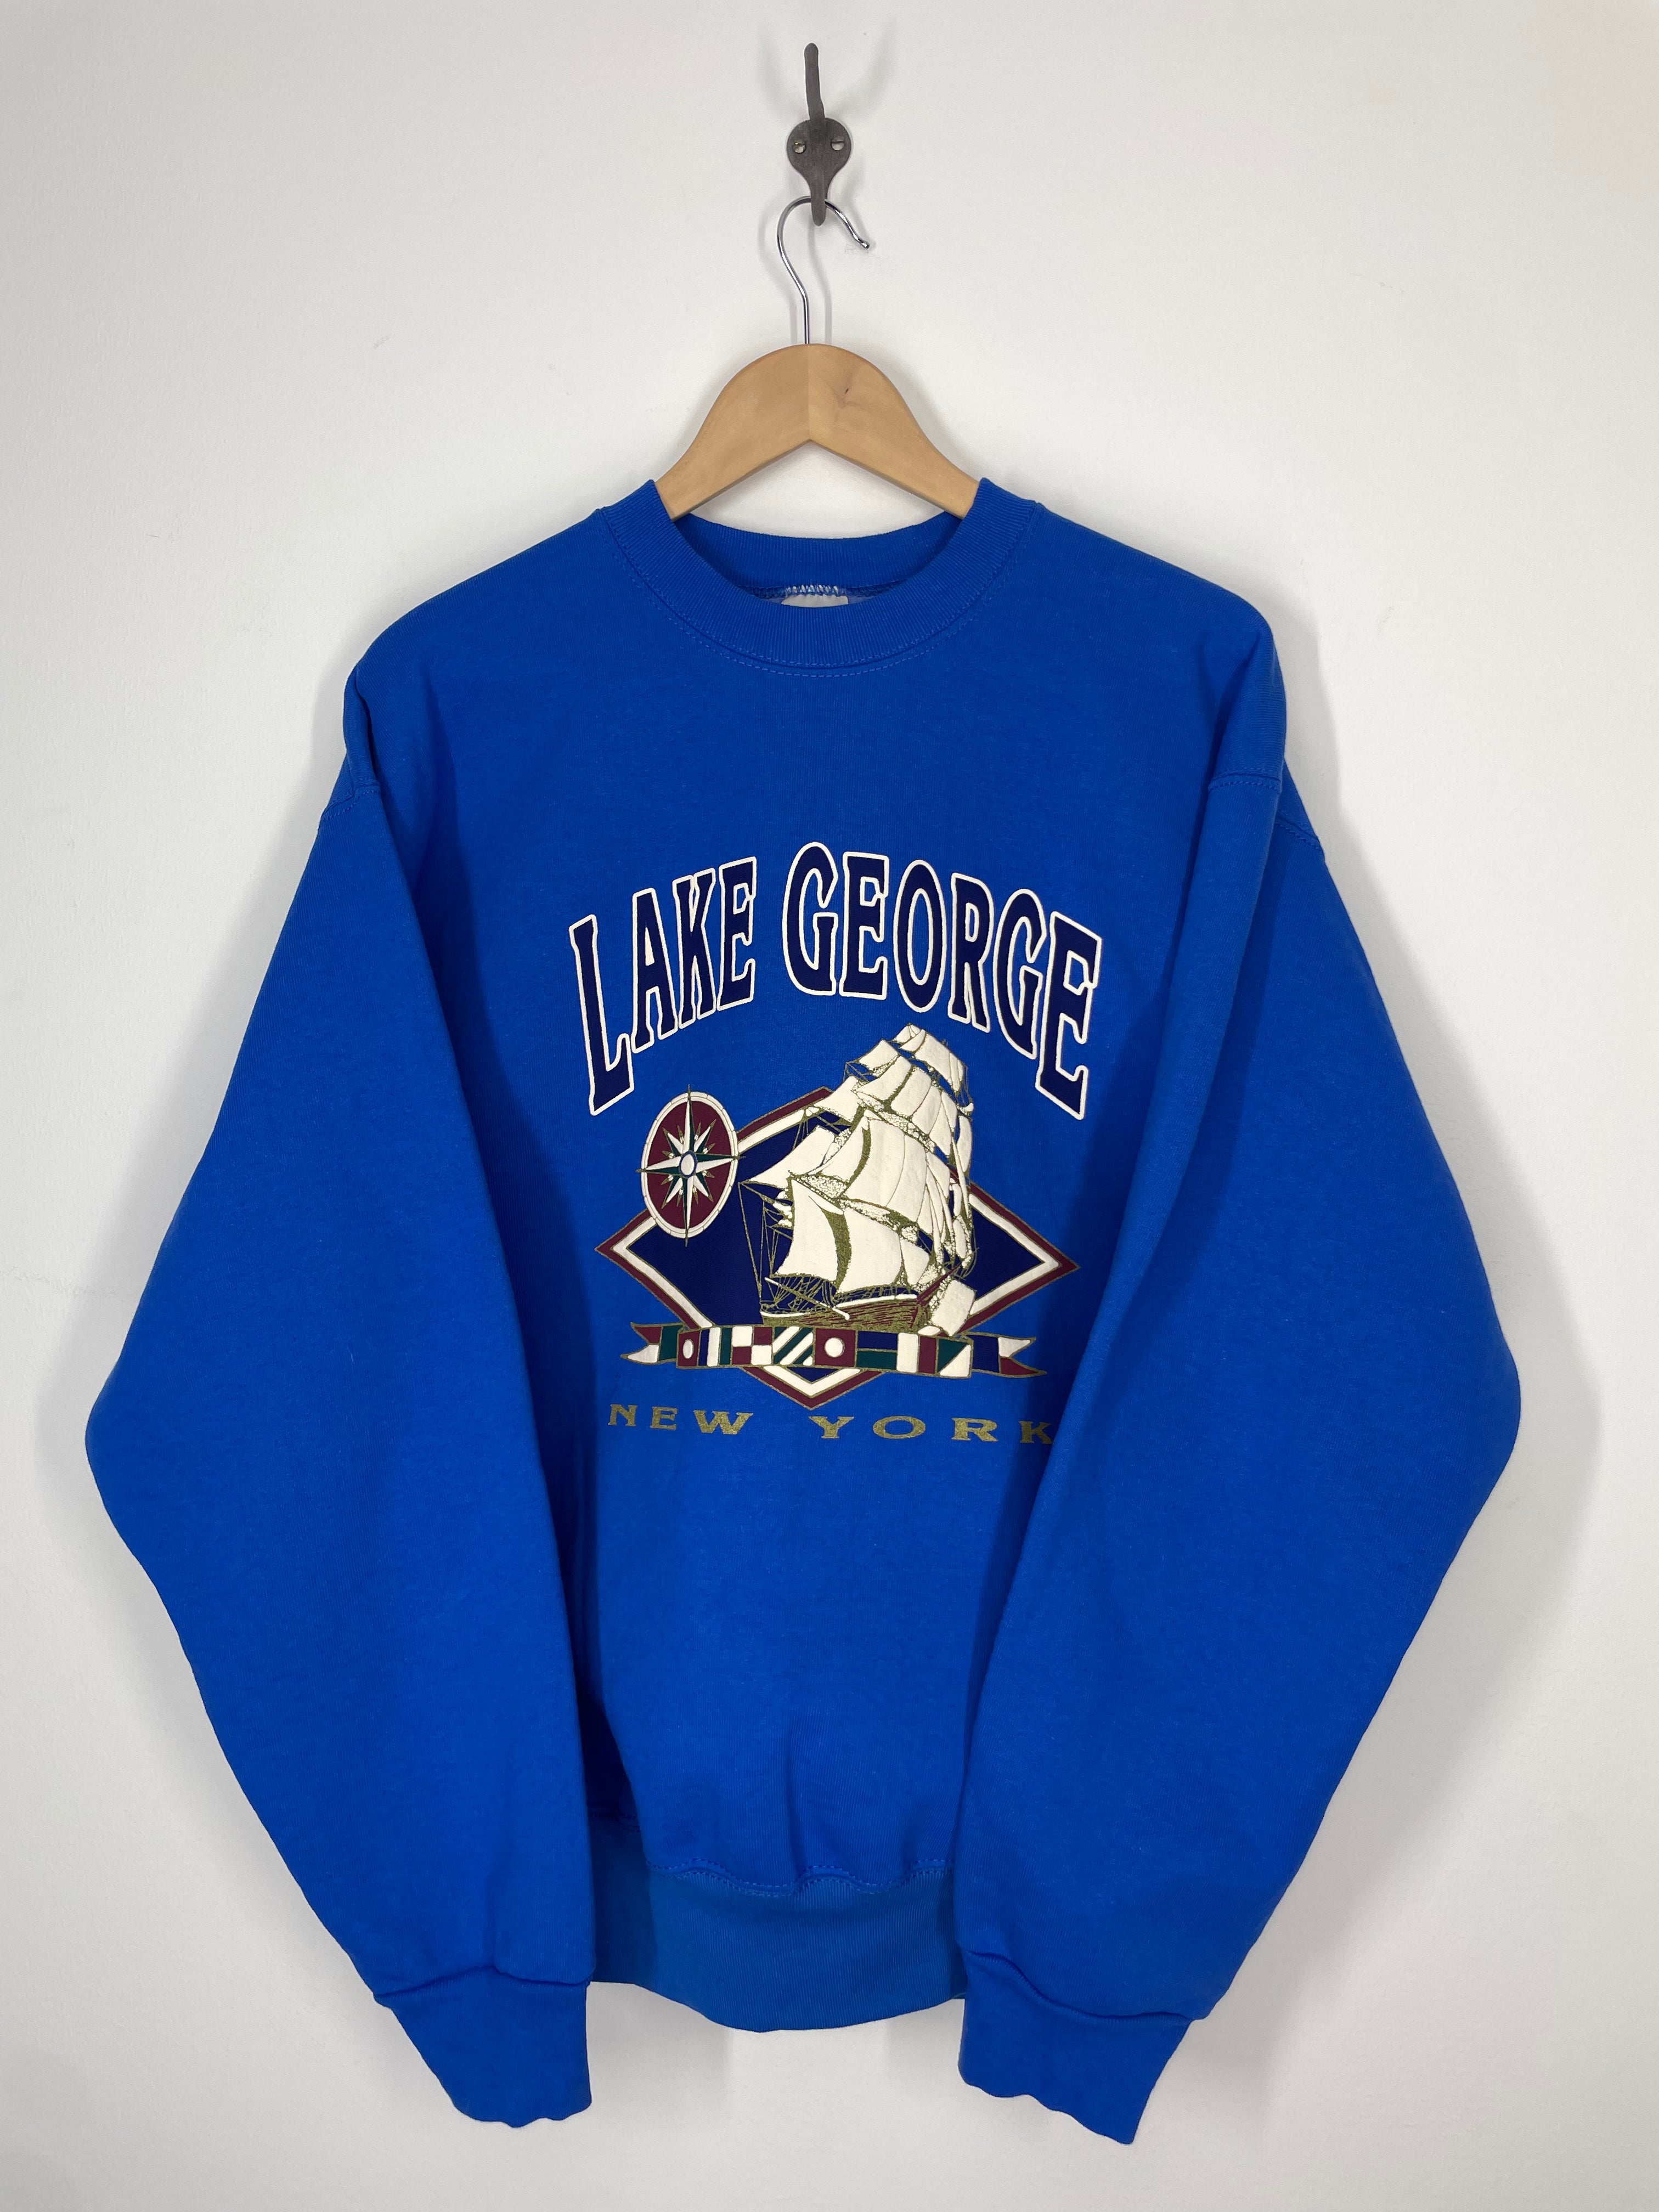 Lake George New York State Puff Graphic Crewneck Sweatshirt - FOTL - L